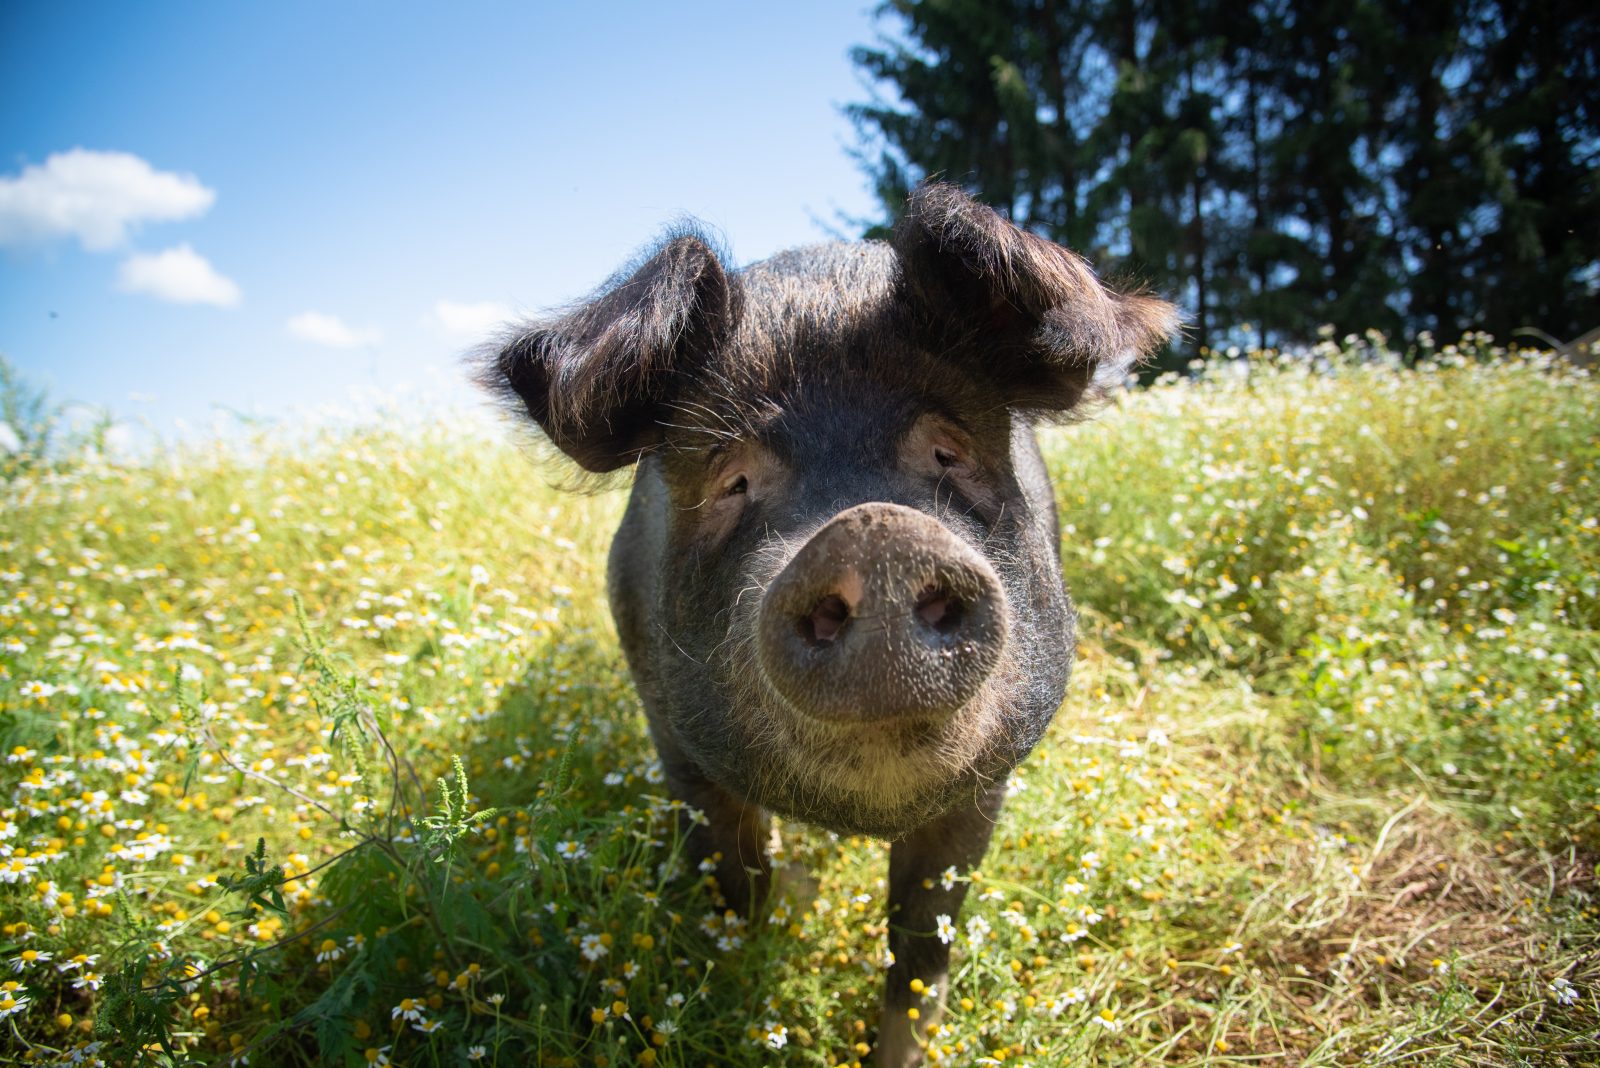 Missy pig at Farm Sanctuary